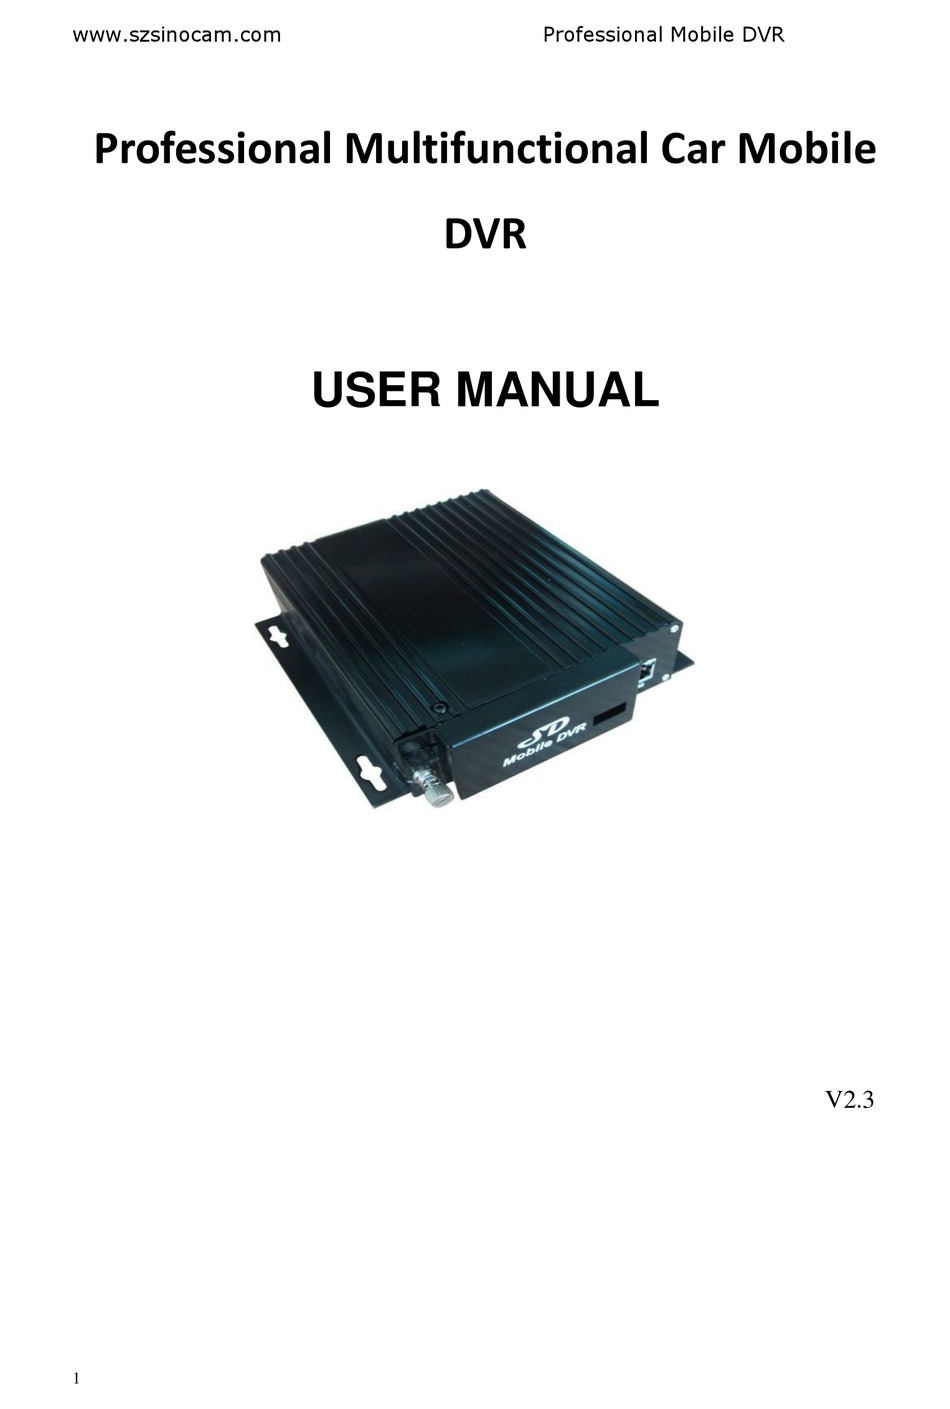 cms dvr manual